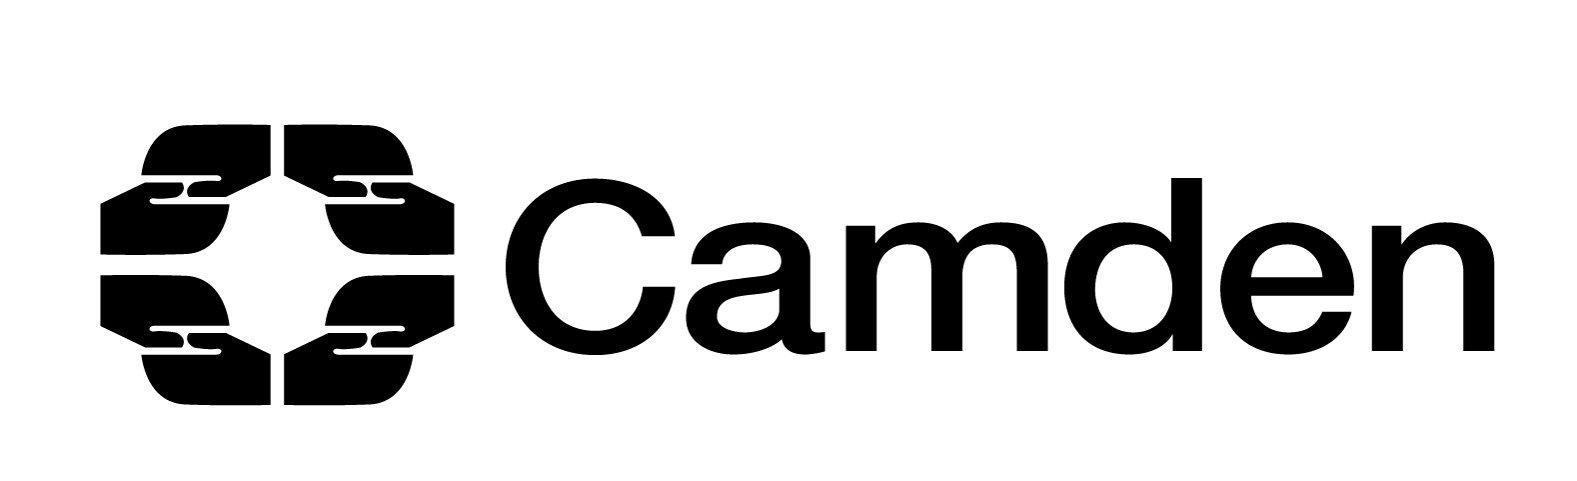 Camden Logo - Camden Council is Recruiting a Volunteer Coordinator - Volunteer ...